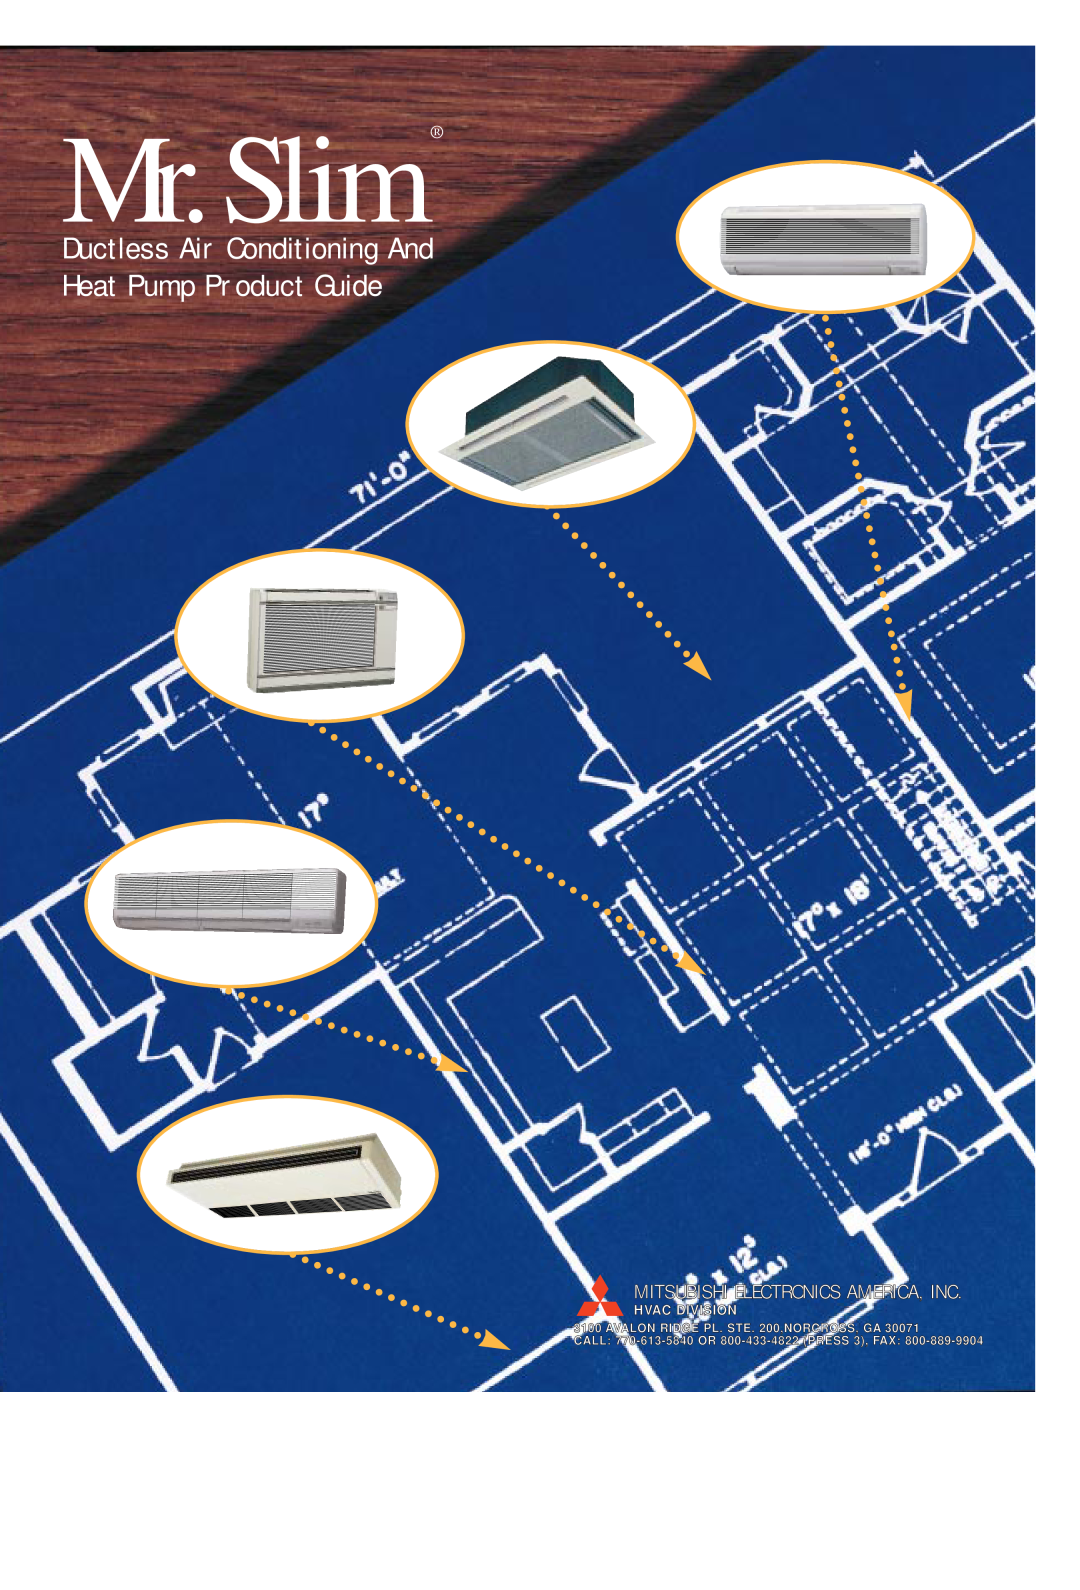 Mitsubishi PCH24EK, PCH36EK, PCH42EK, NH569NXA, PC42EK manual Mr.Slim, Ductless Air Conditioning And, Heat Pump Product Guide 